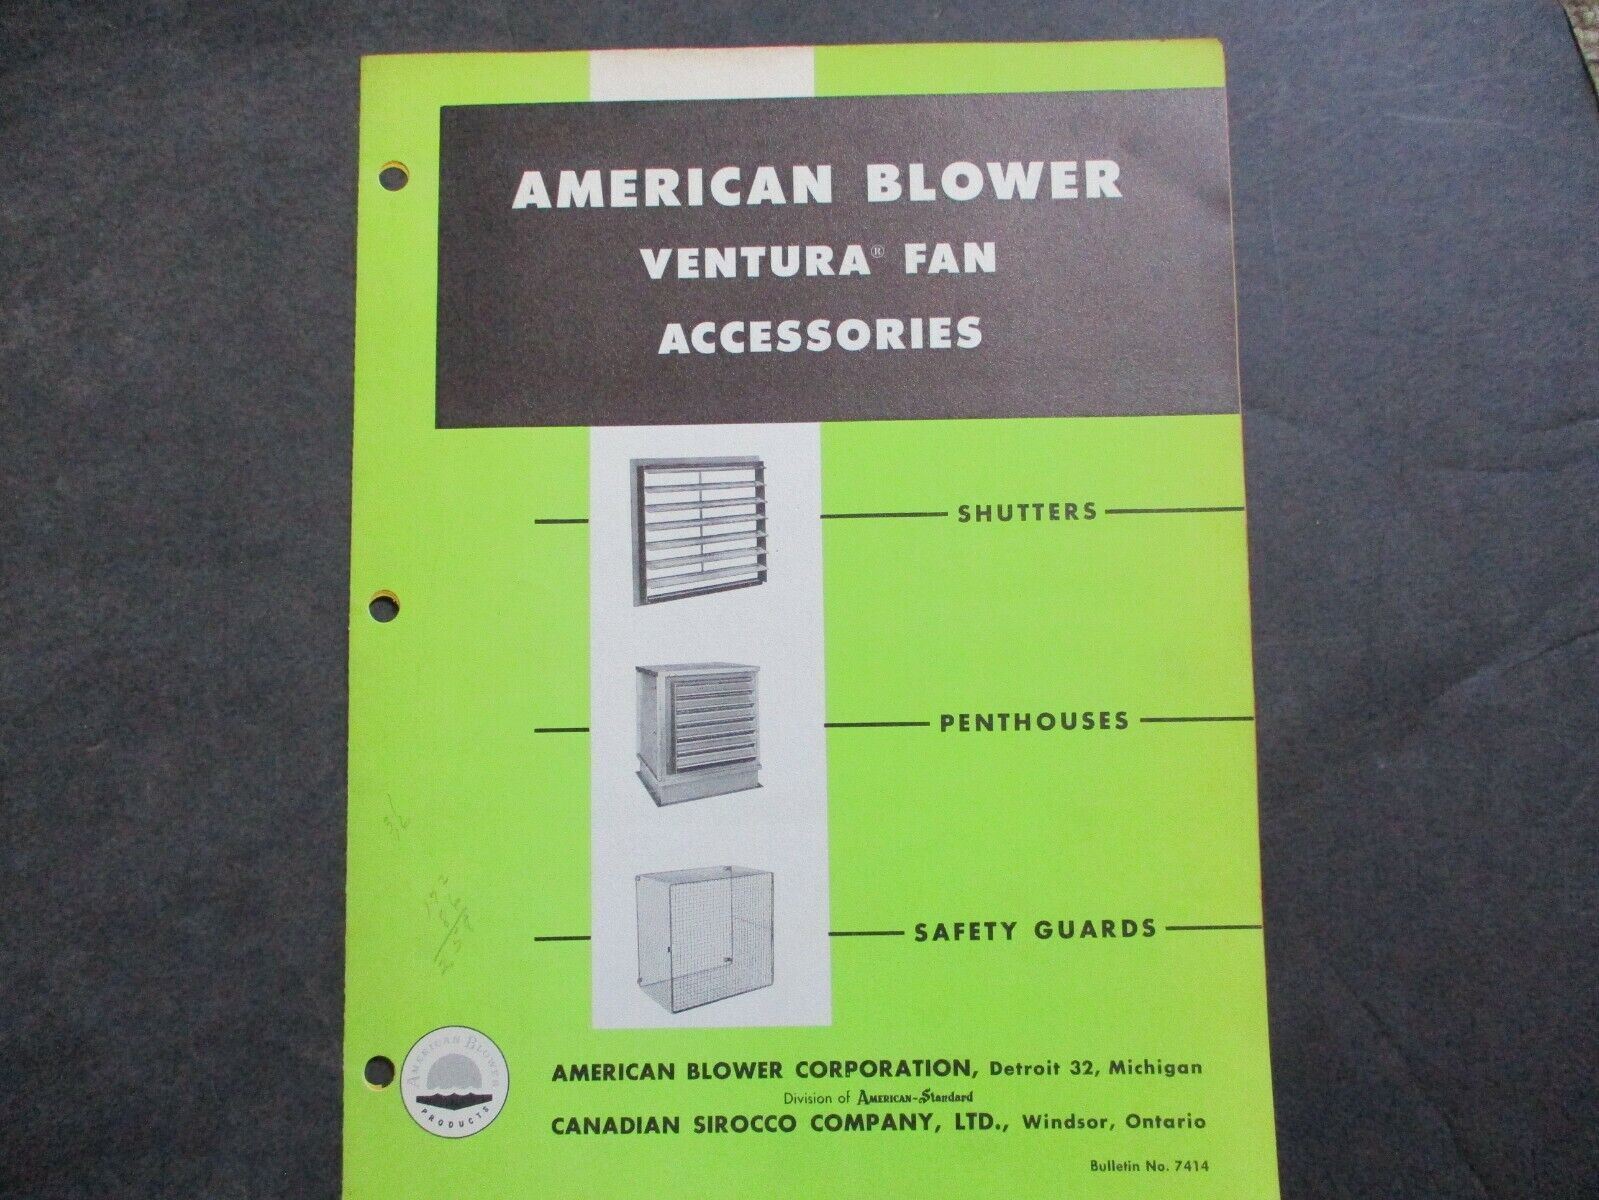 American Blower Ventura Fan Accessories Bulletin No. 7414